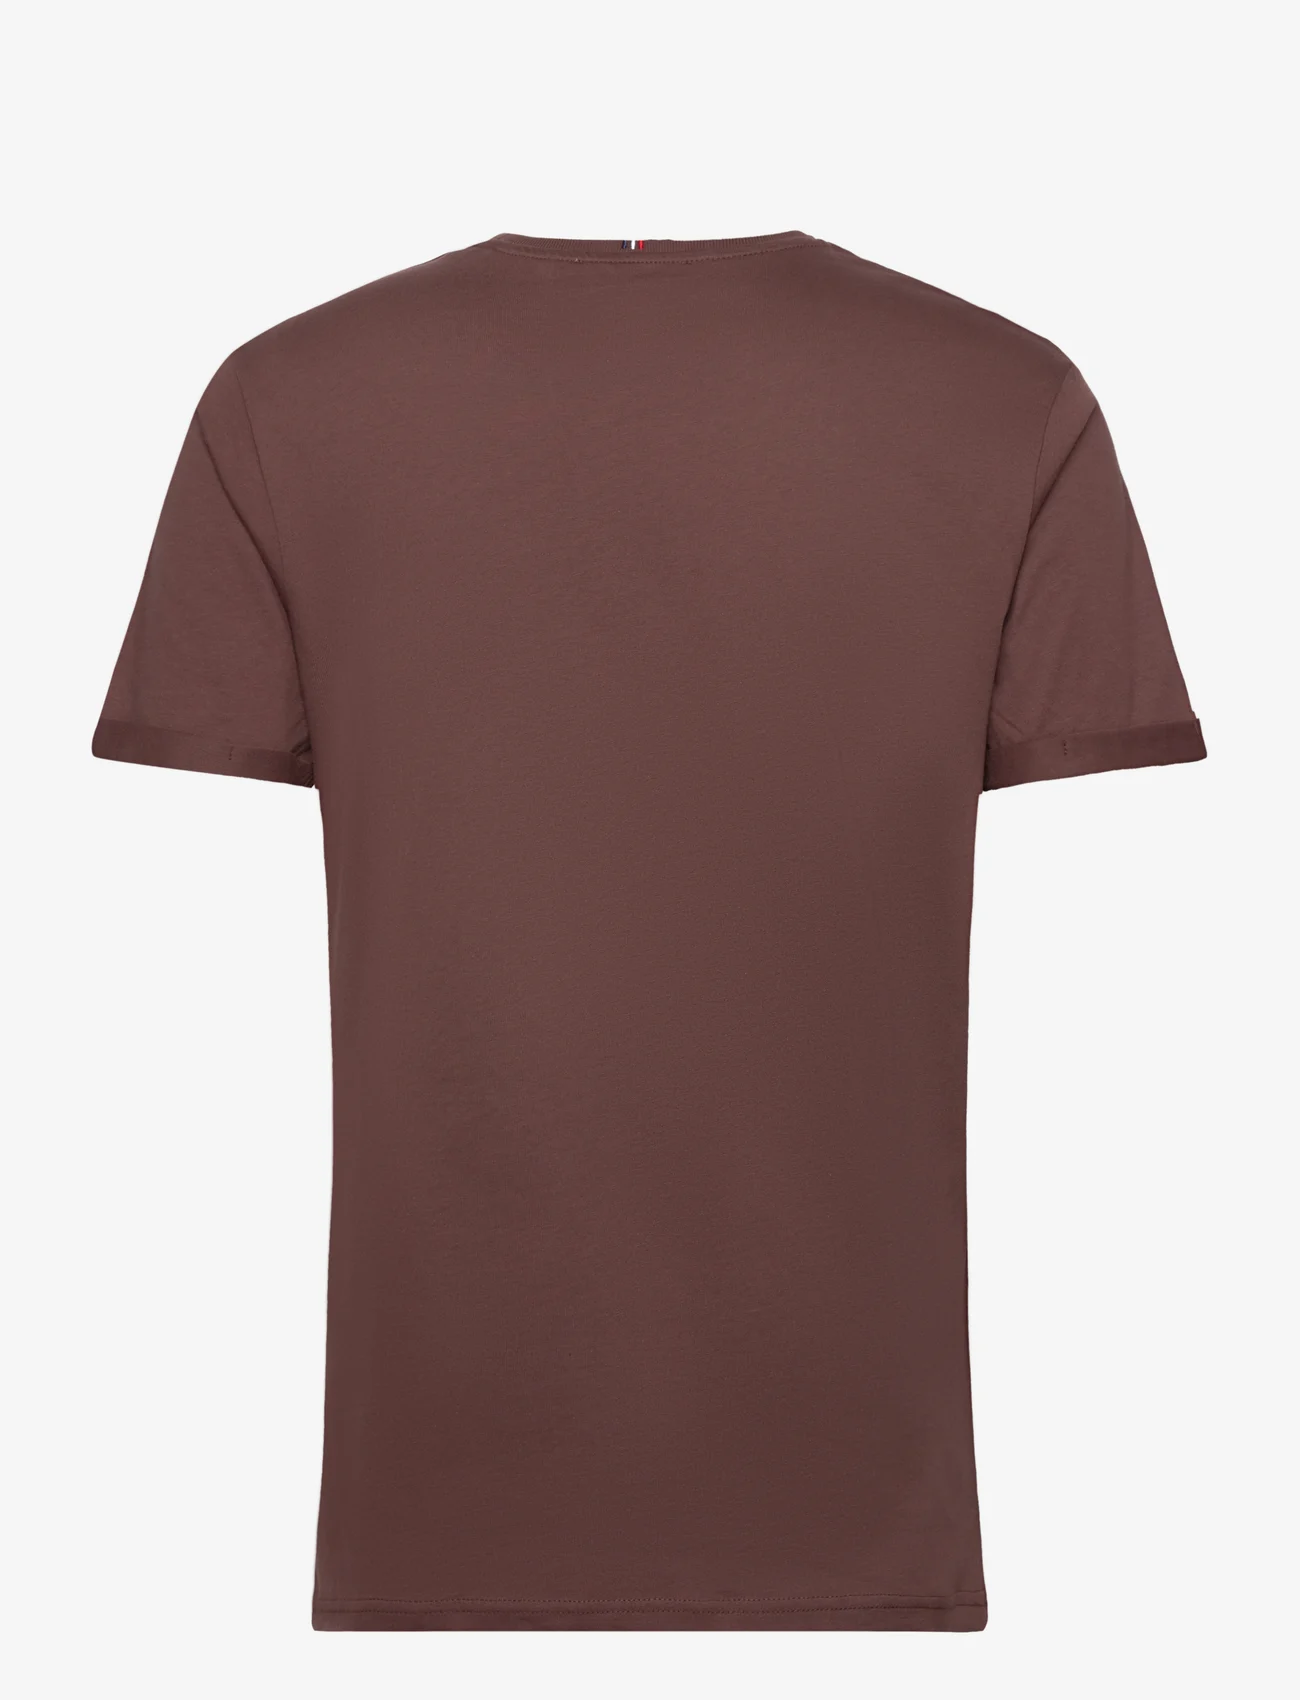 Les Deux - Nørregaard T-Shirt - Seasonal - laagste prijzen - ebony brown/orange - 1